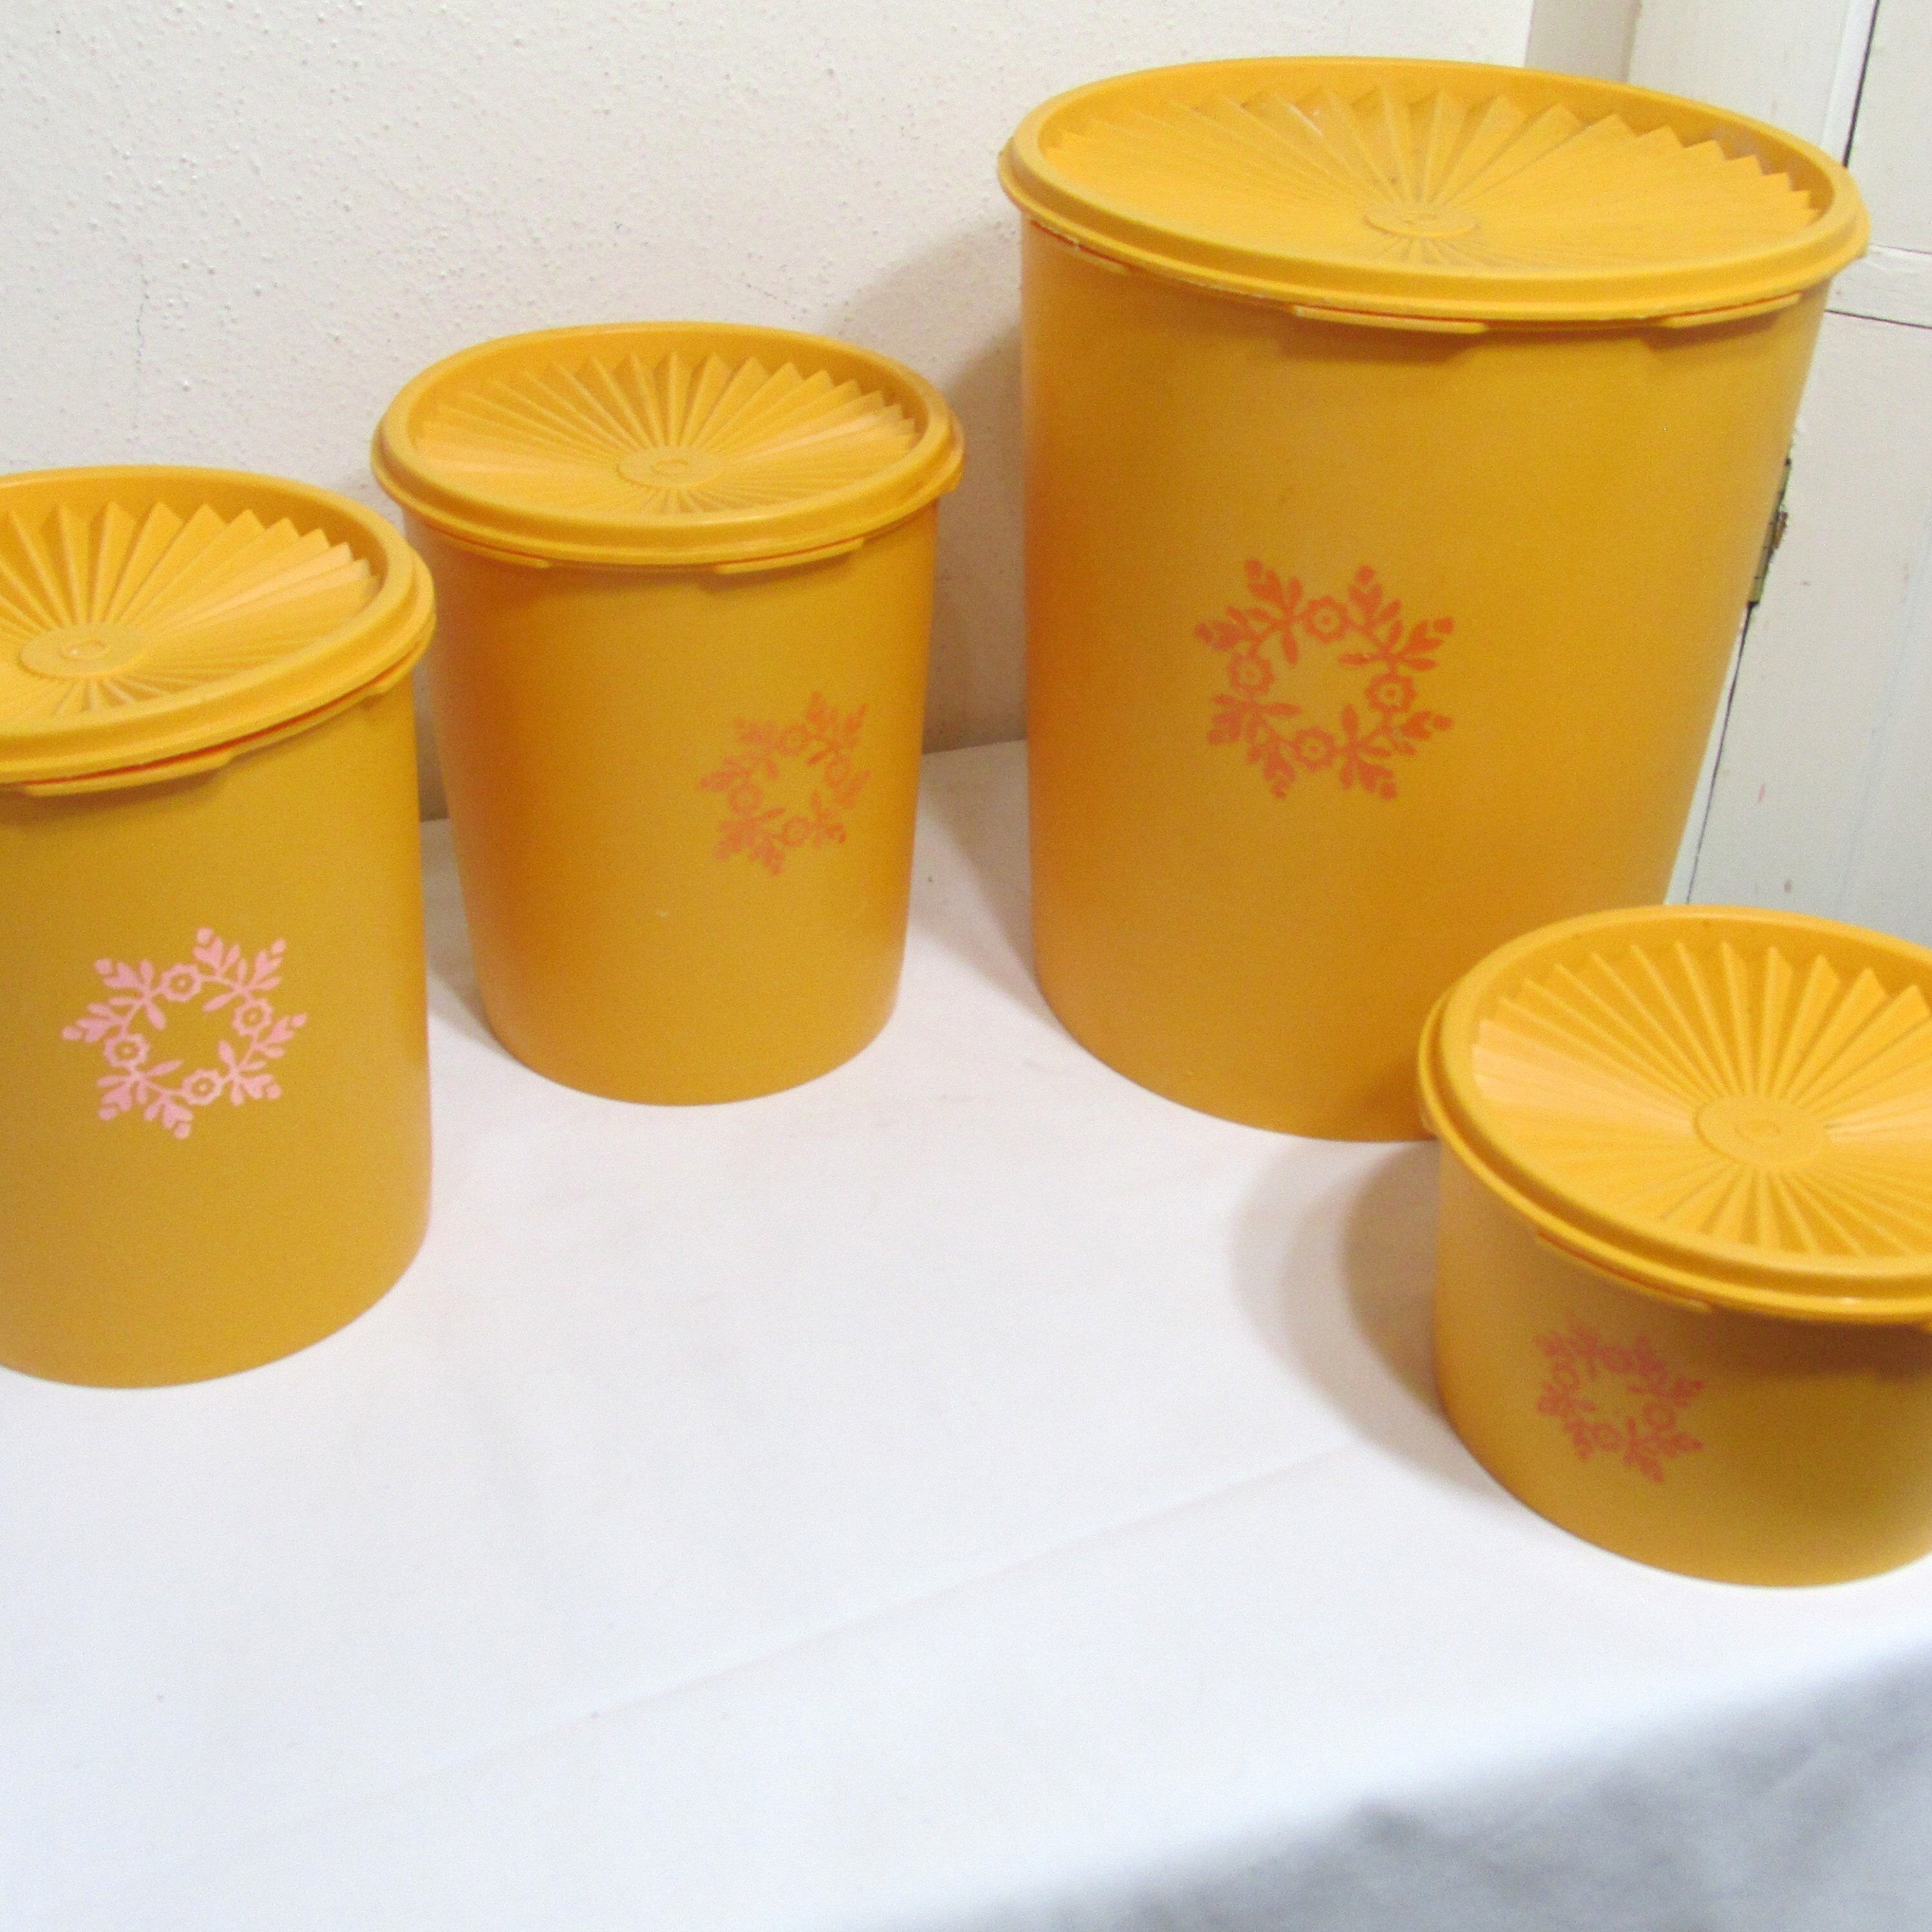 Vintage Tupperware bread box, Tupperware storage container, yellow